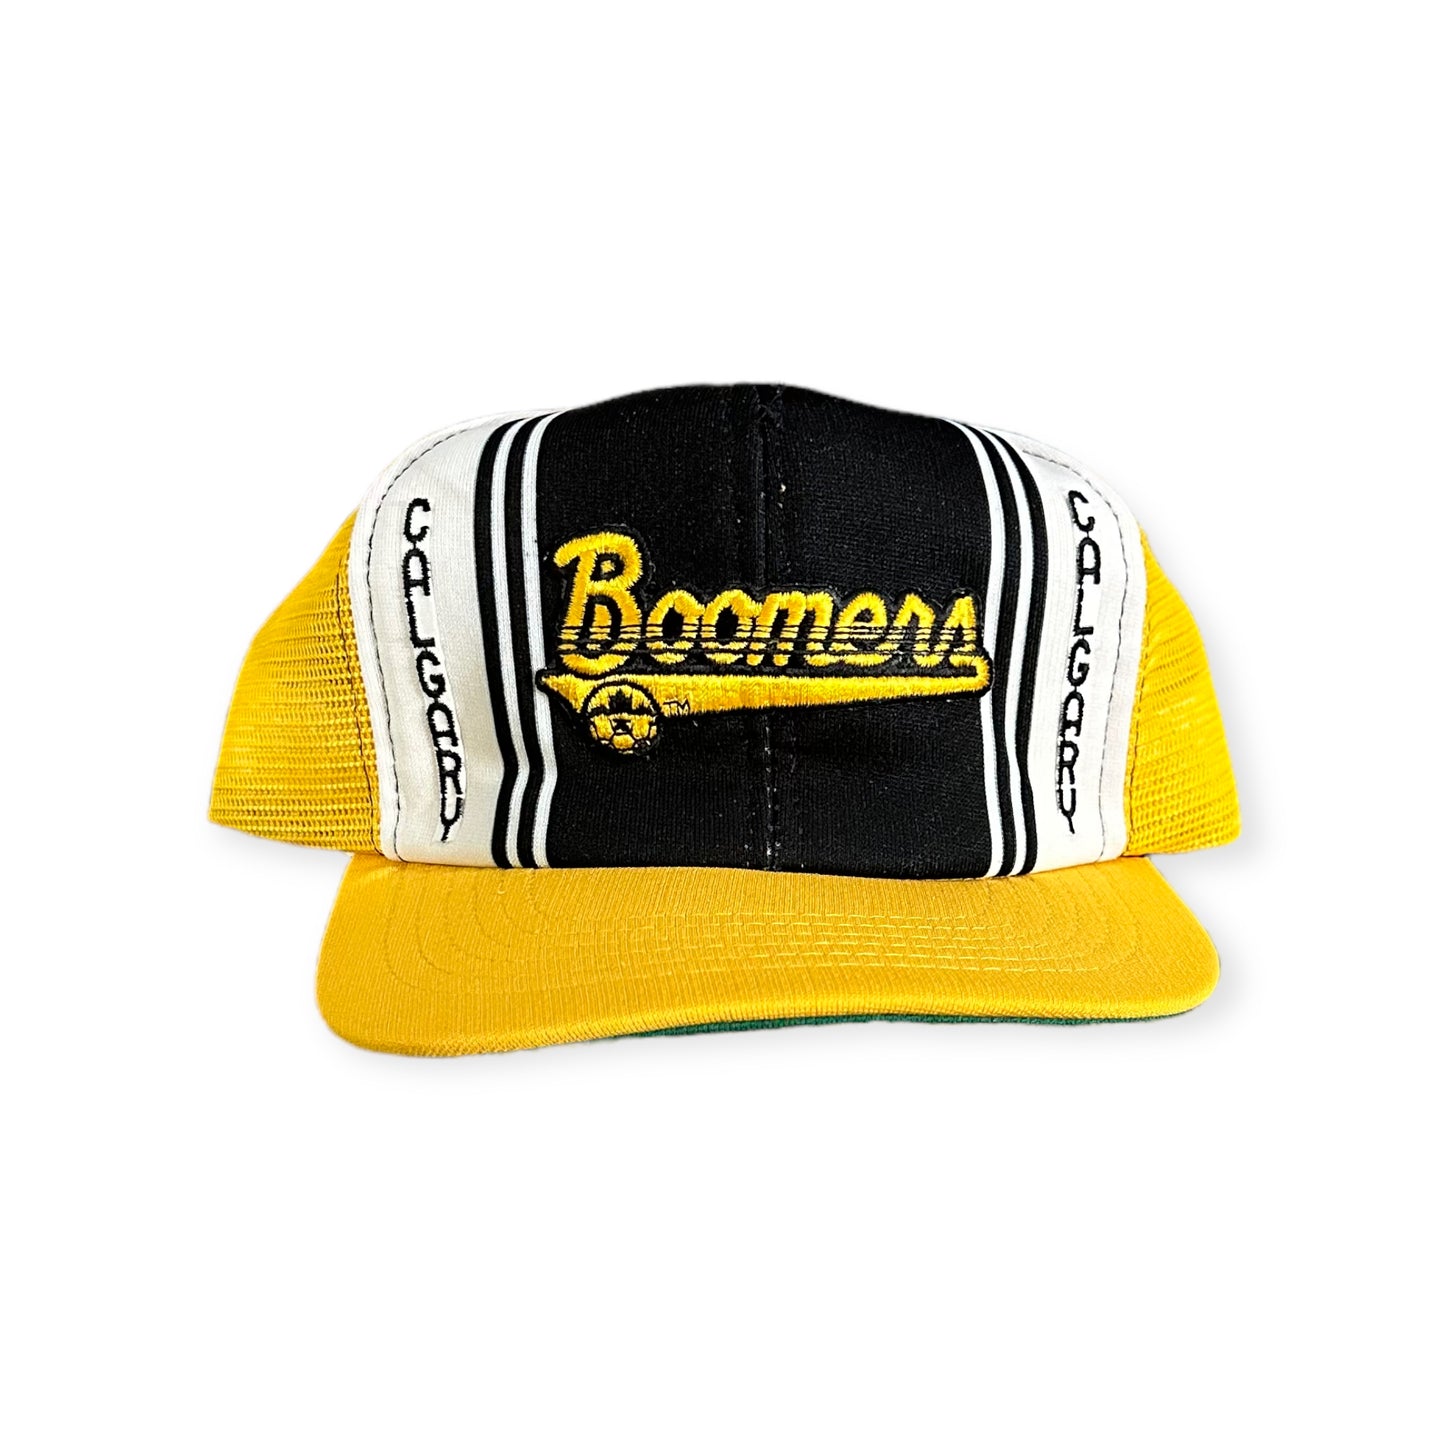 Vintage Calgary Boomers Trucker Hat